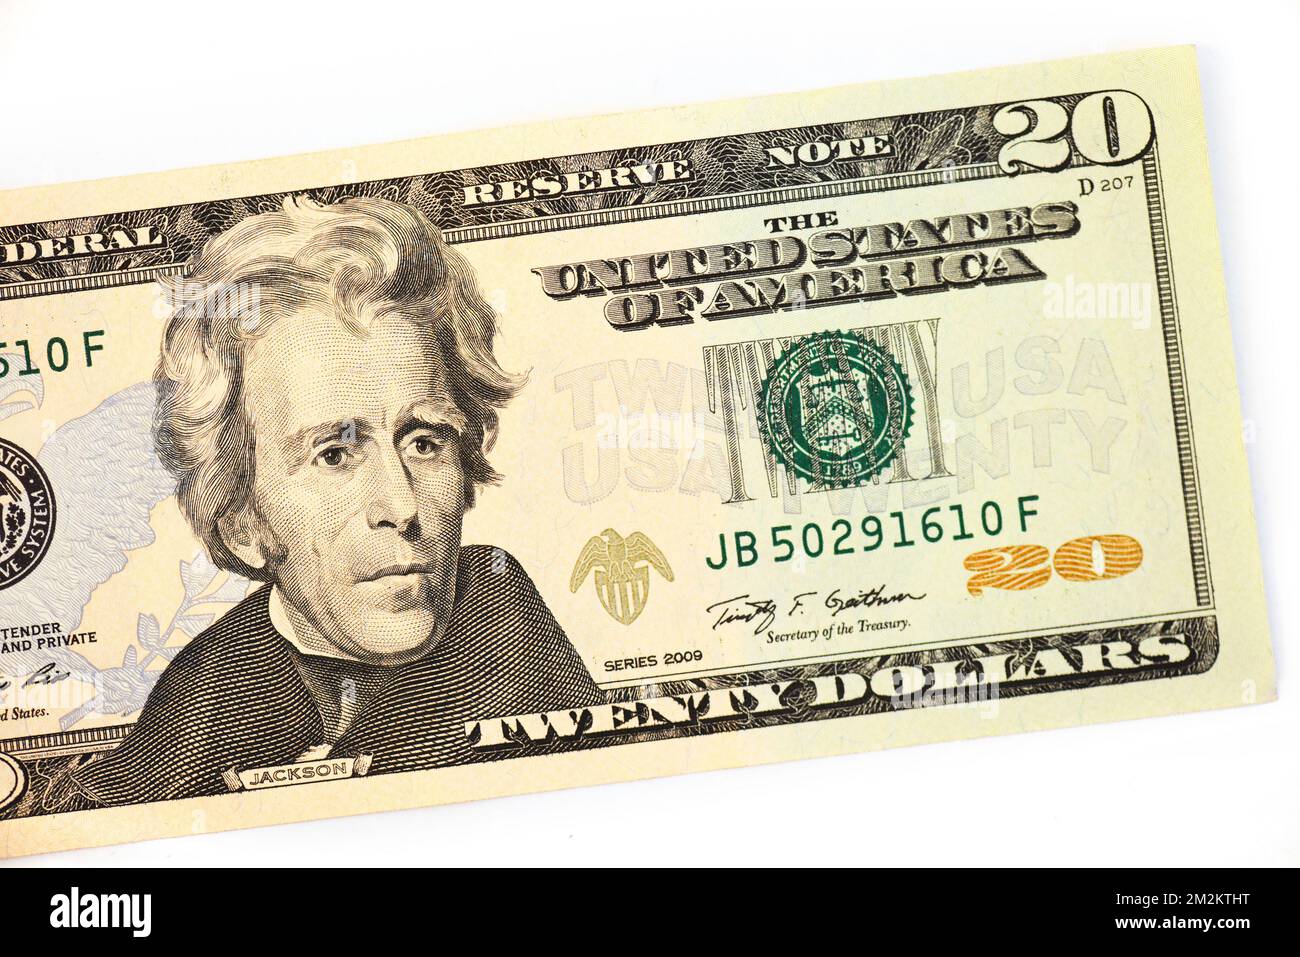 USA bank note Stock Photo